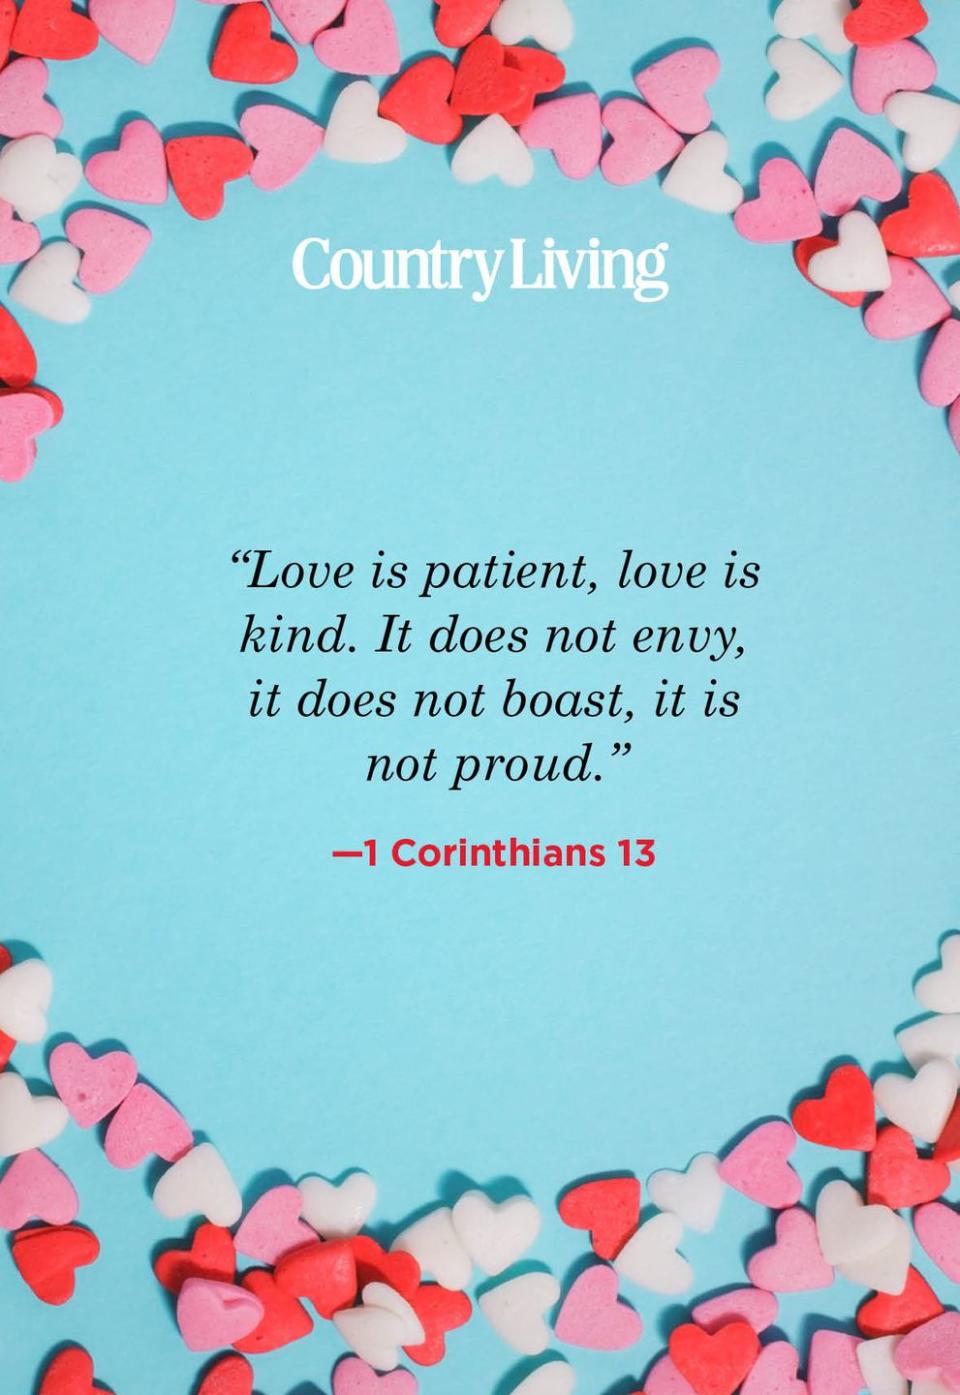 <p>"Love is patient, love is kind. It does not envy, it does not boast, it is not proud."</p>